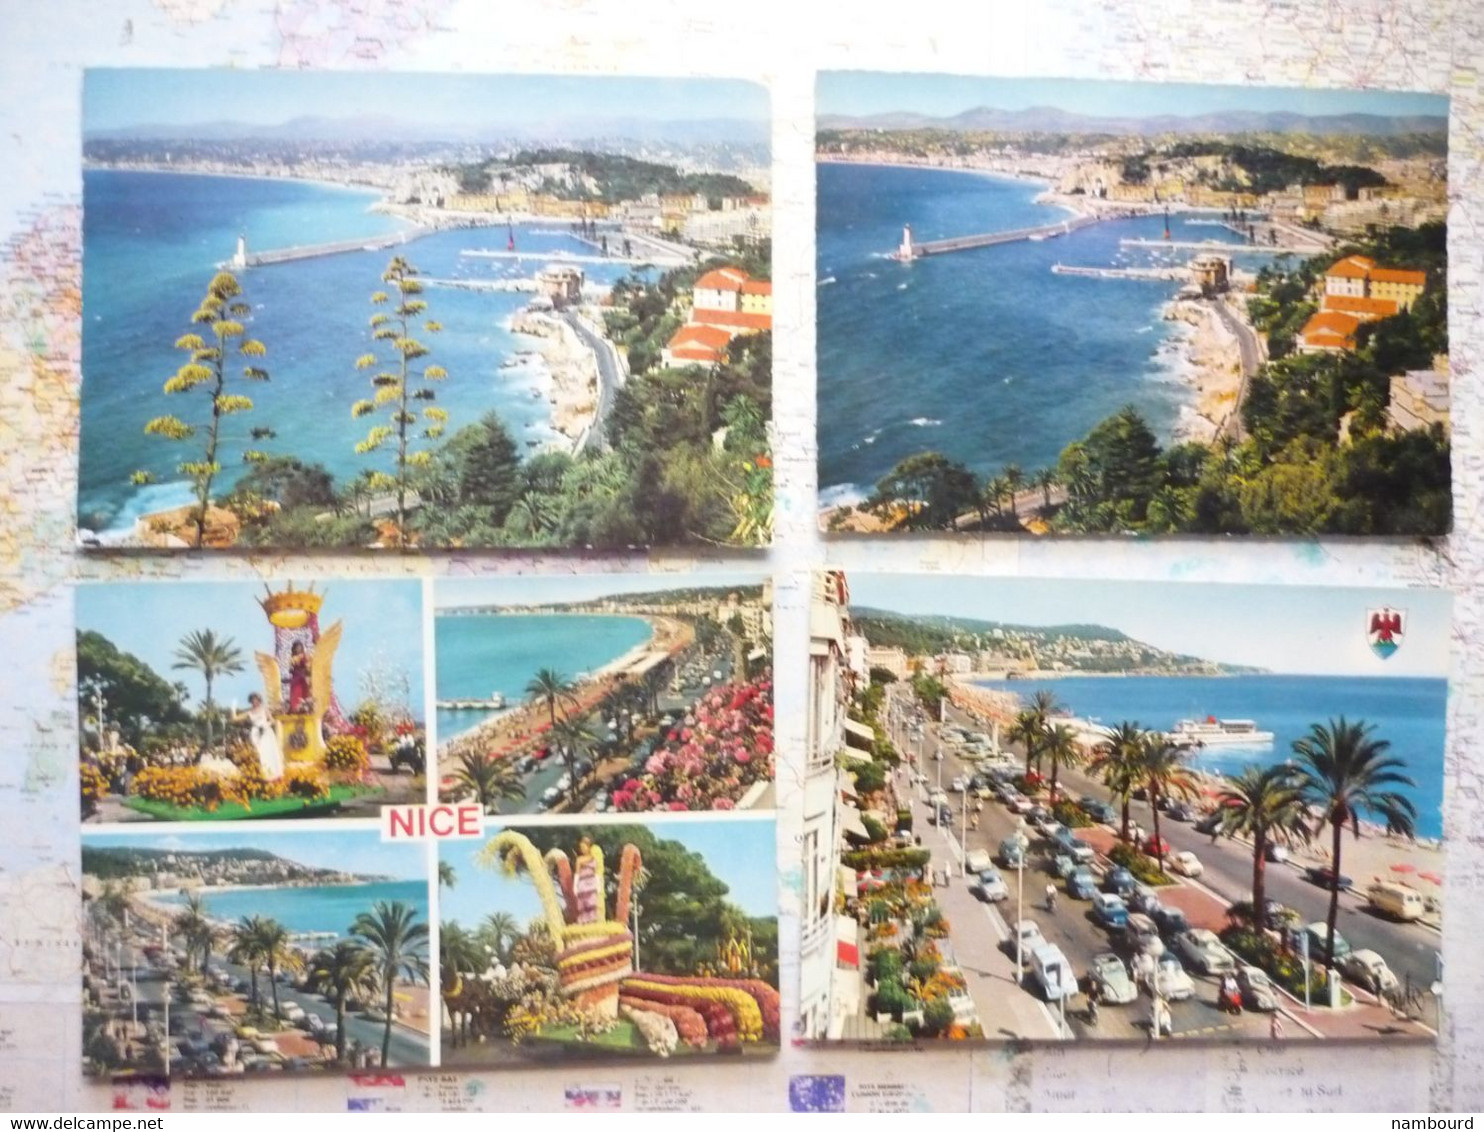 100 cartes modernes de Nice